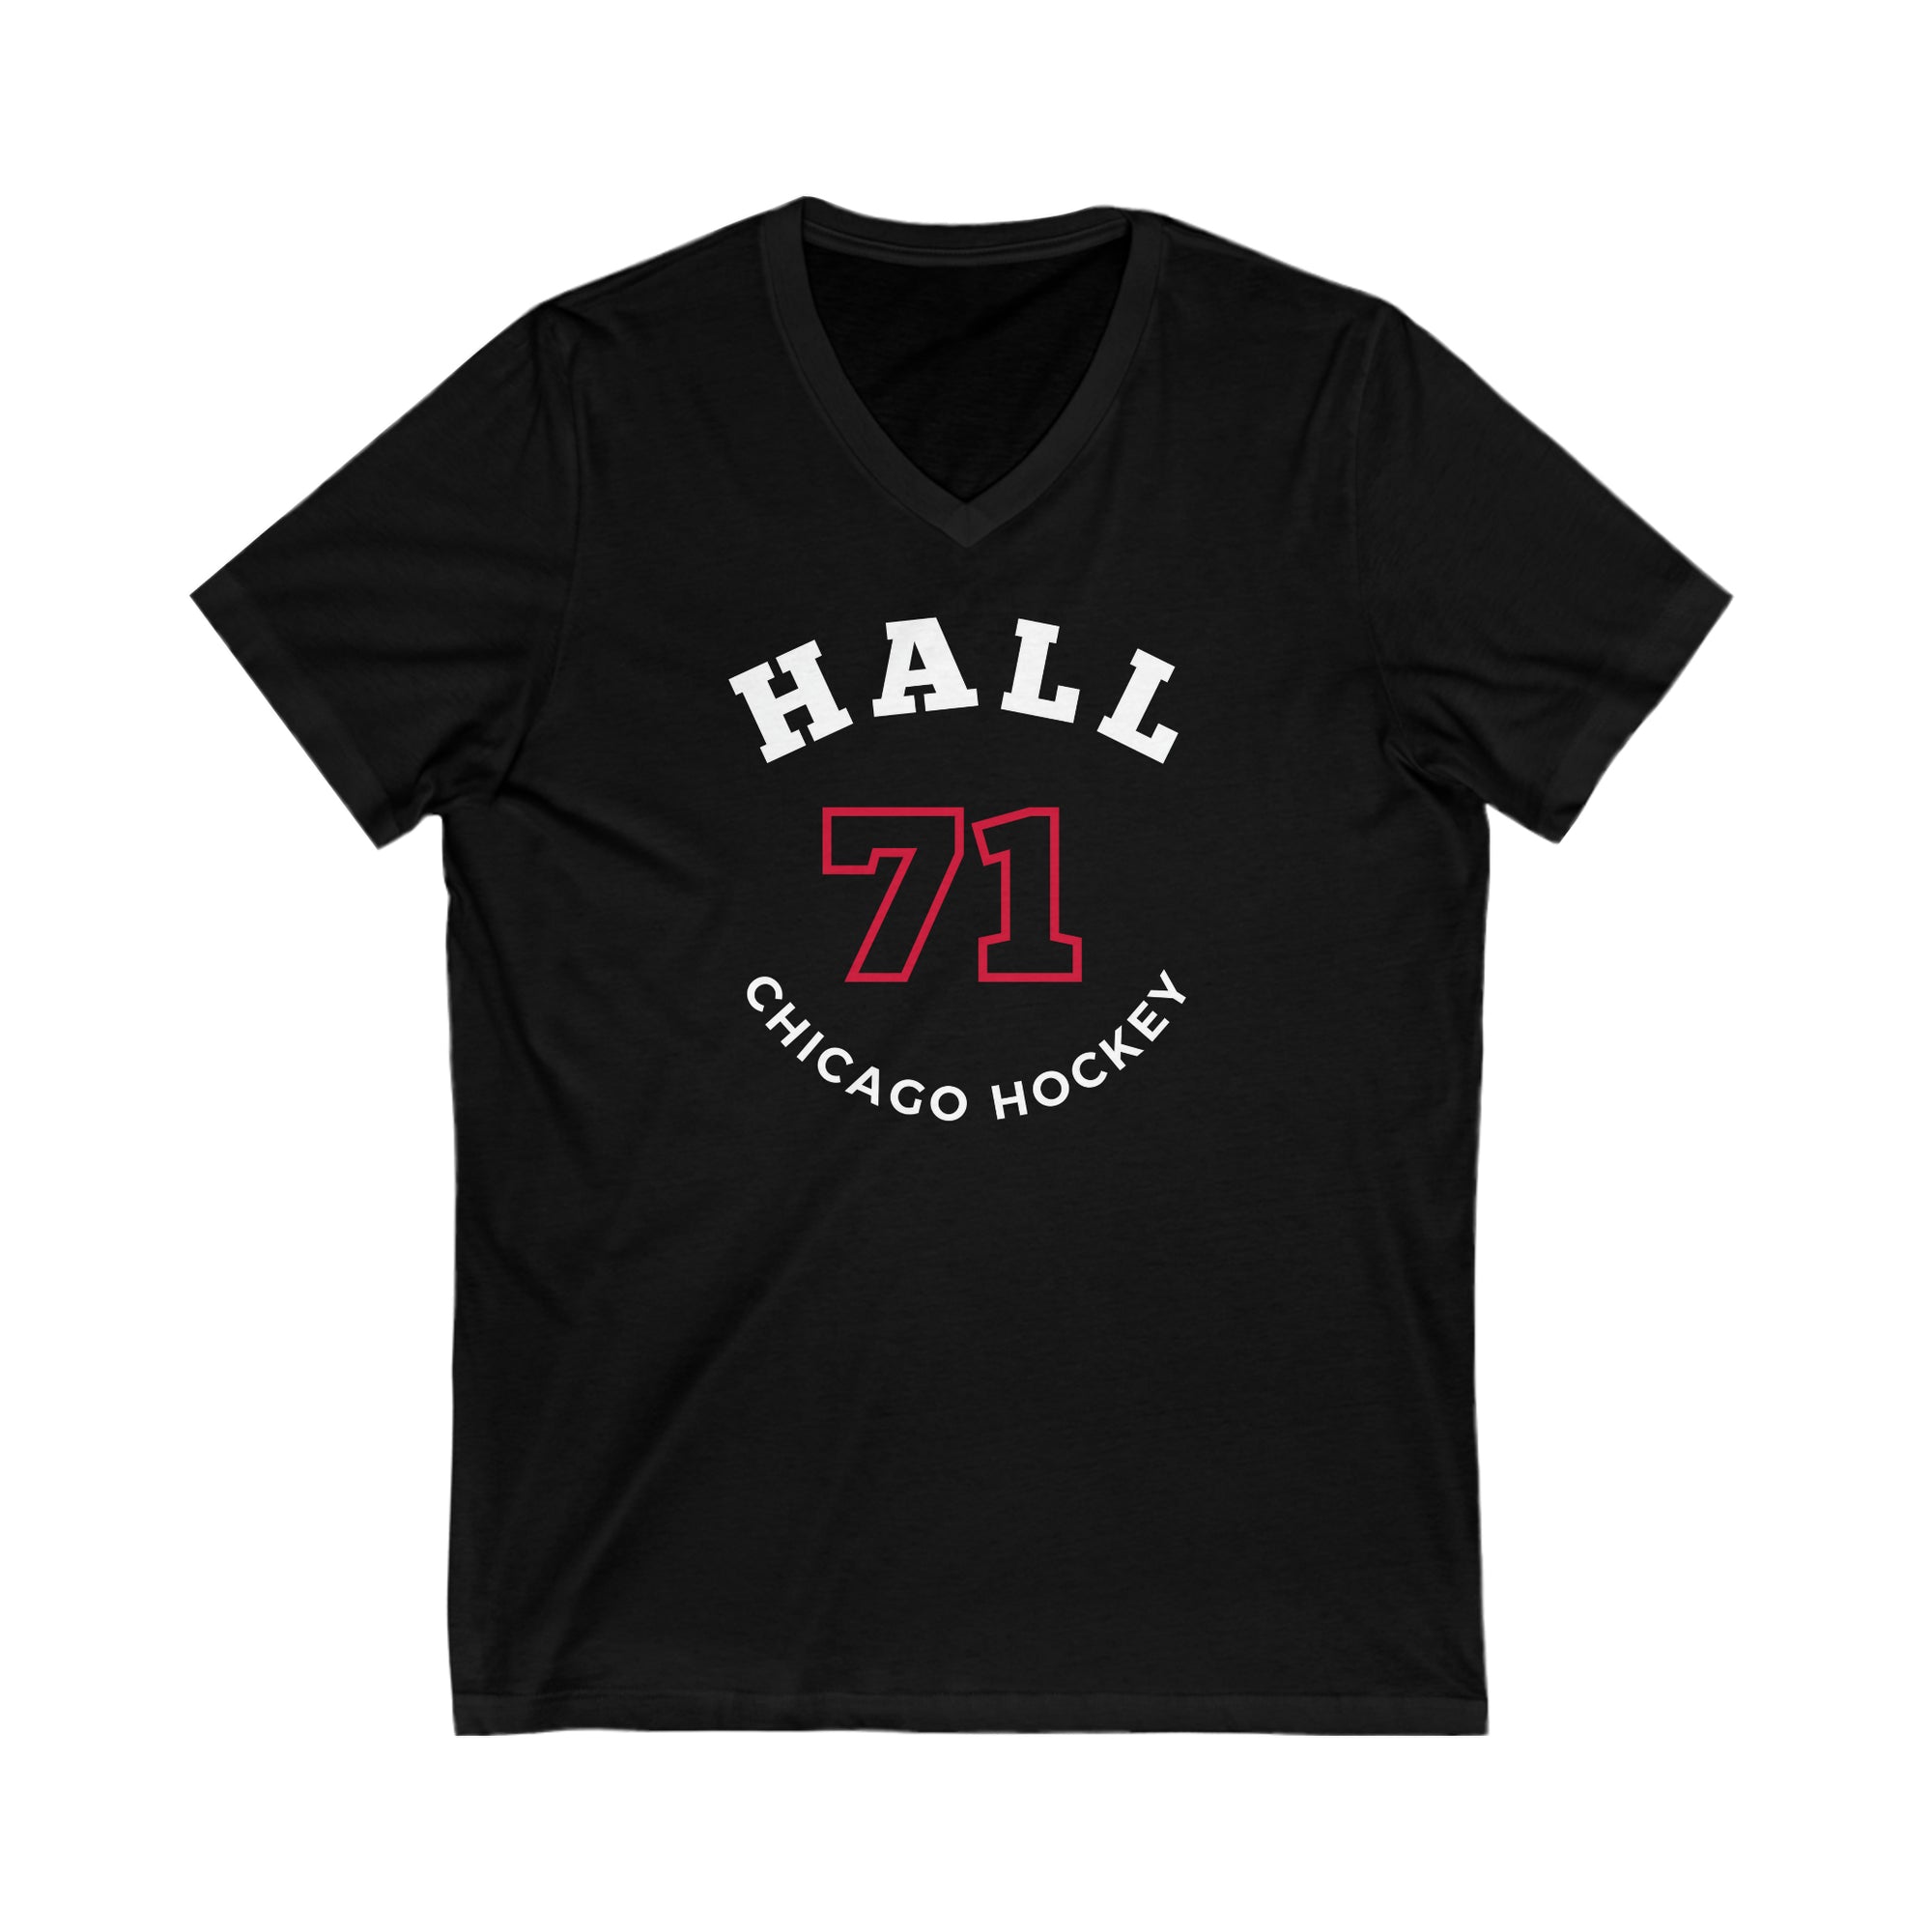 Hall 71 Chicago Hockey Number Arch Design Unisex V-Neck Tee